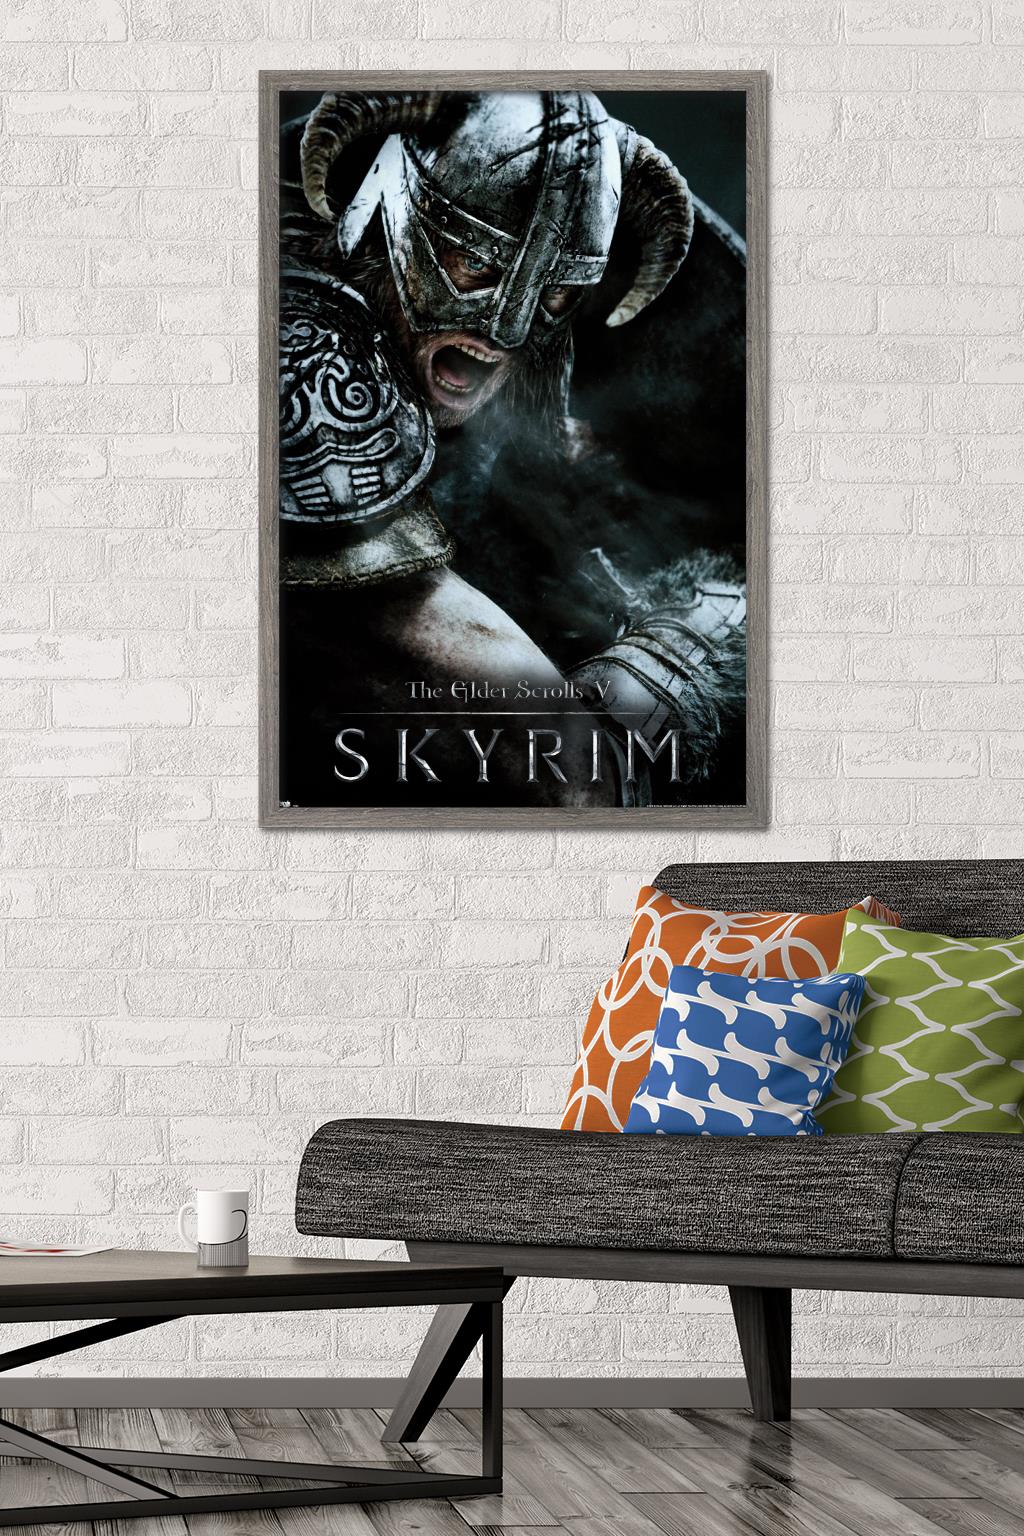 The Elder Scrolls V: Skyrim - Aerial Wall Poster, 22.375" x 34" Framed - image 2 of 5